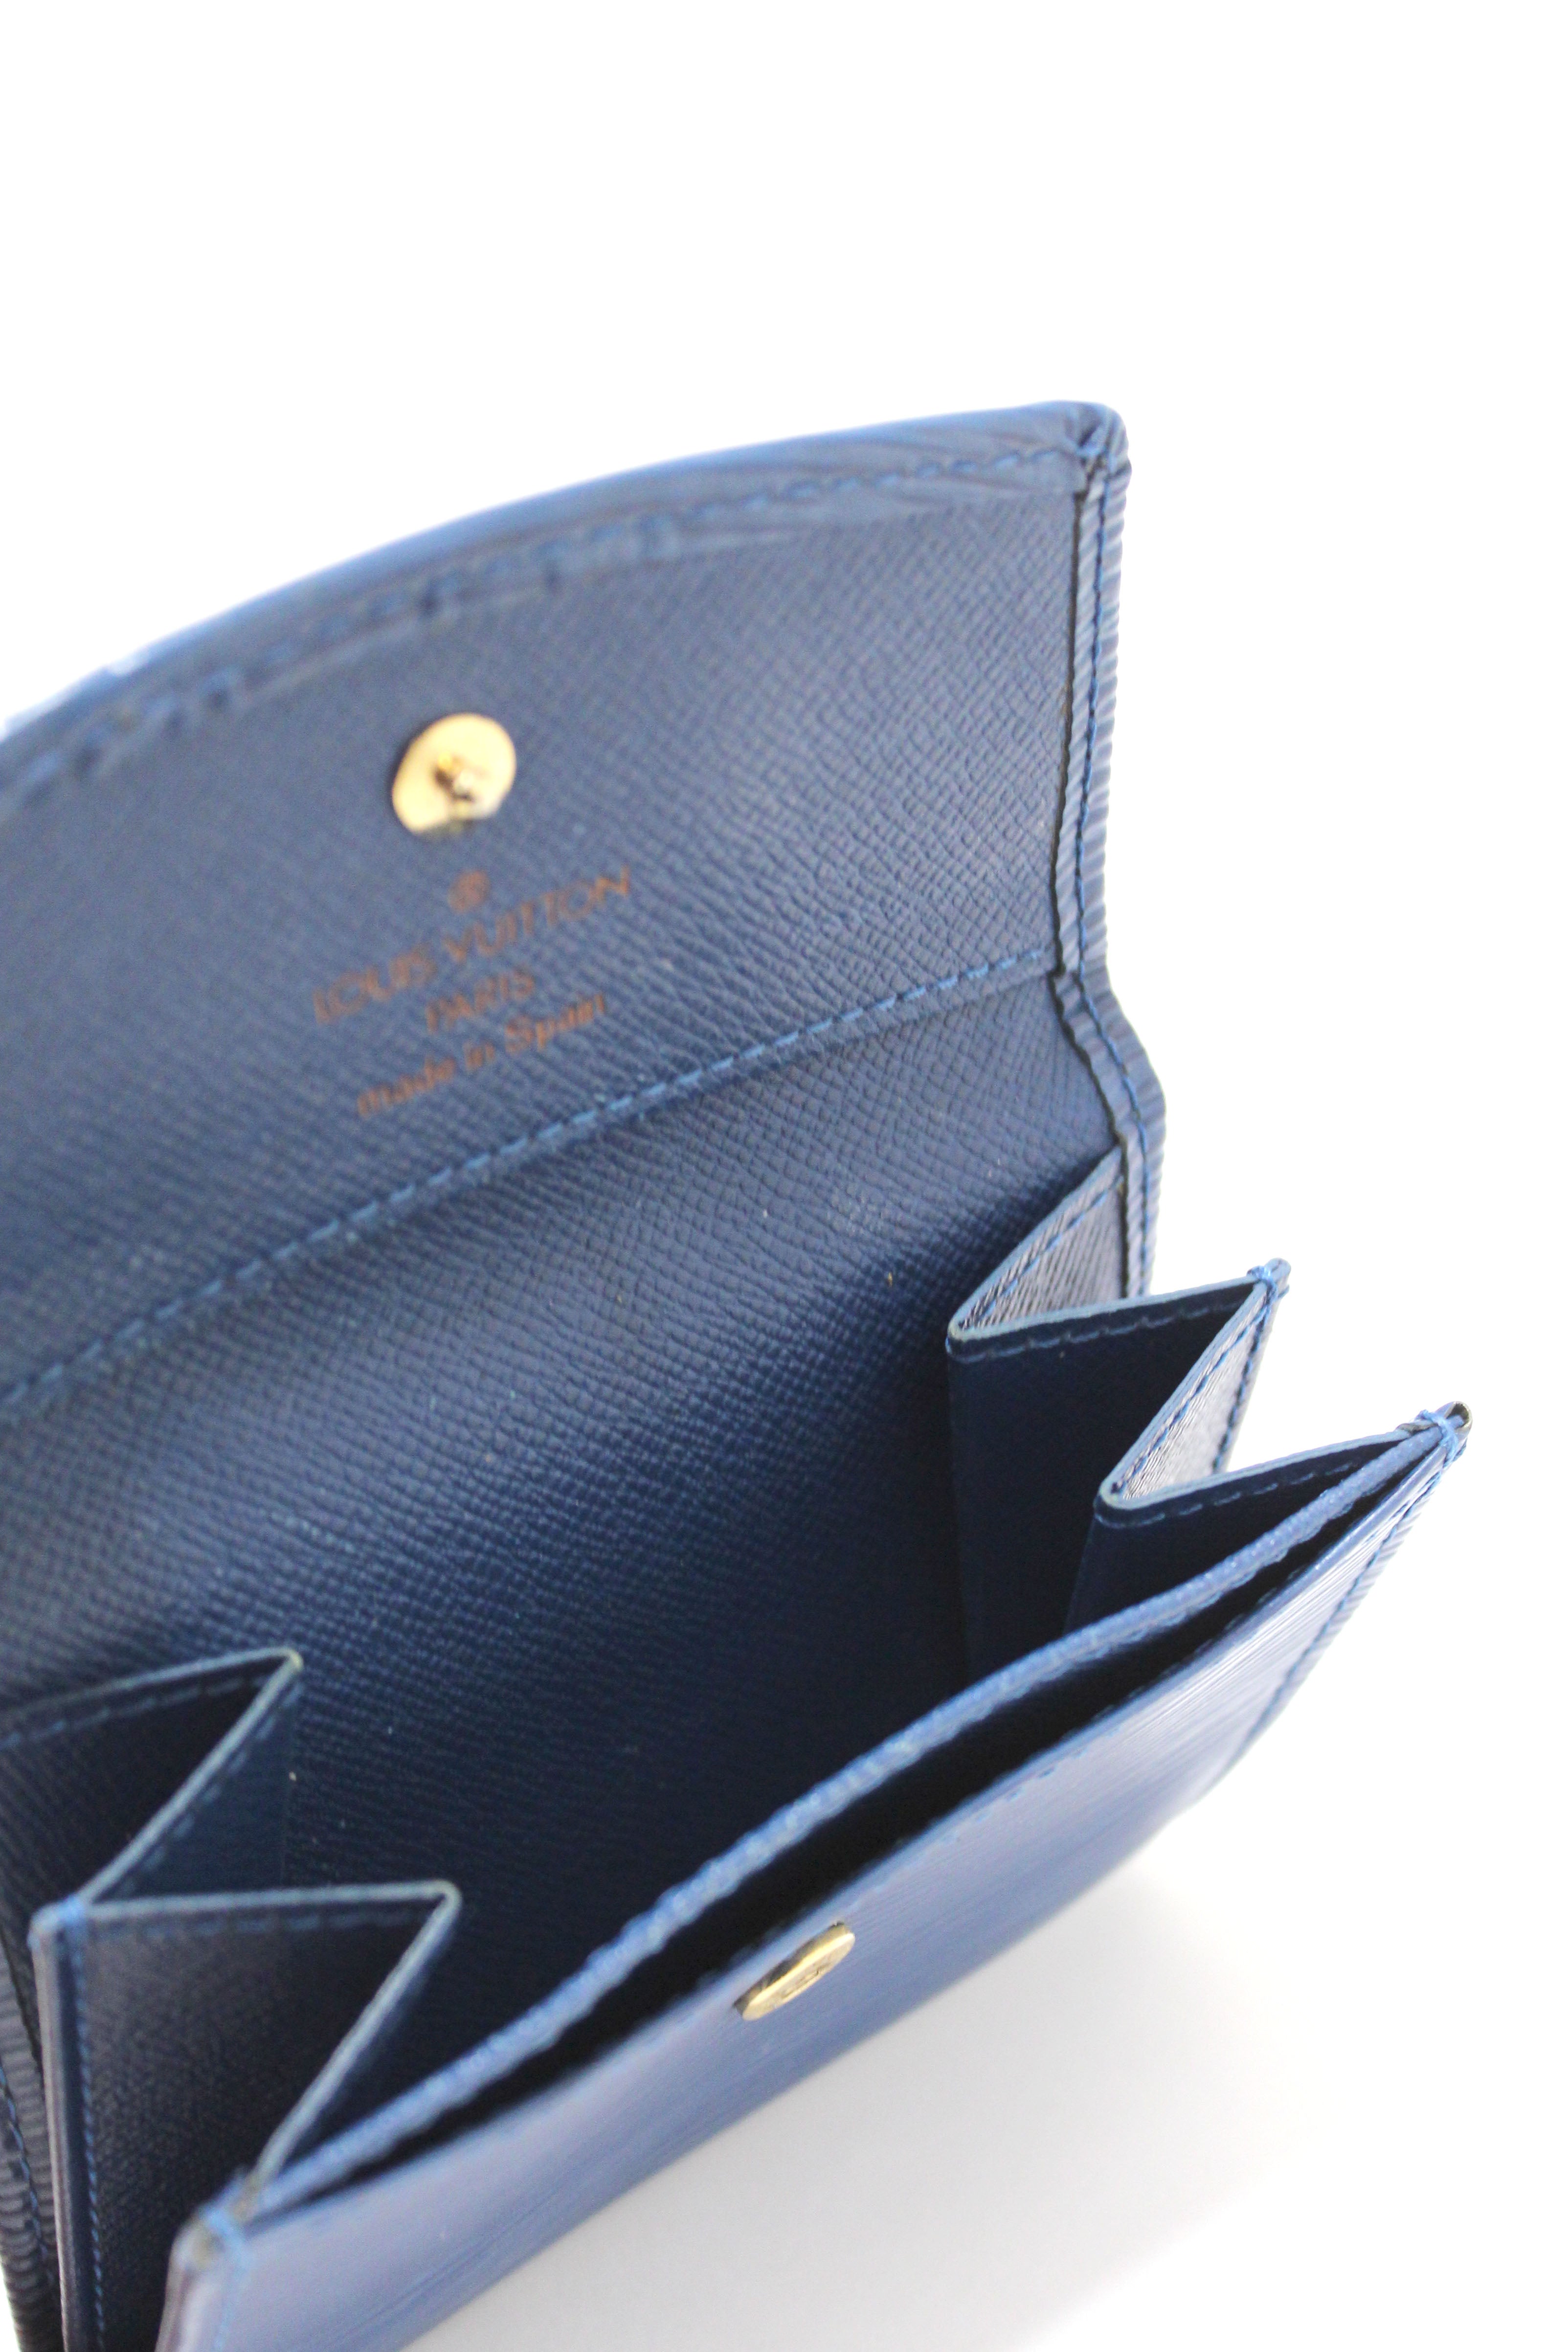 Louis Vuitton Blue EPI Toledo Card Case Holder 15LVA615